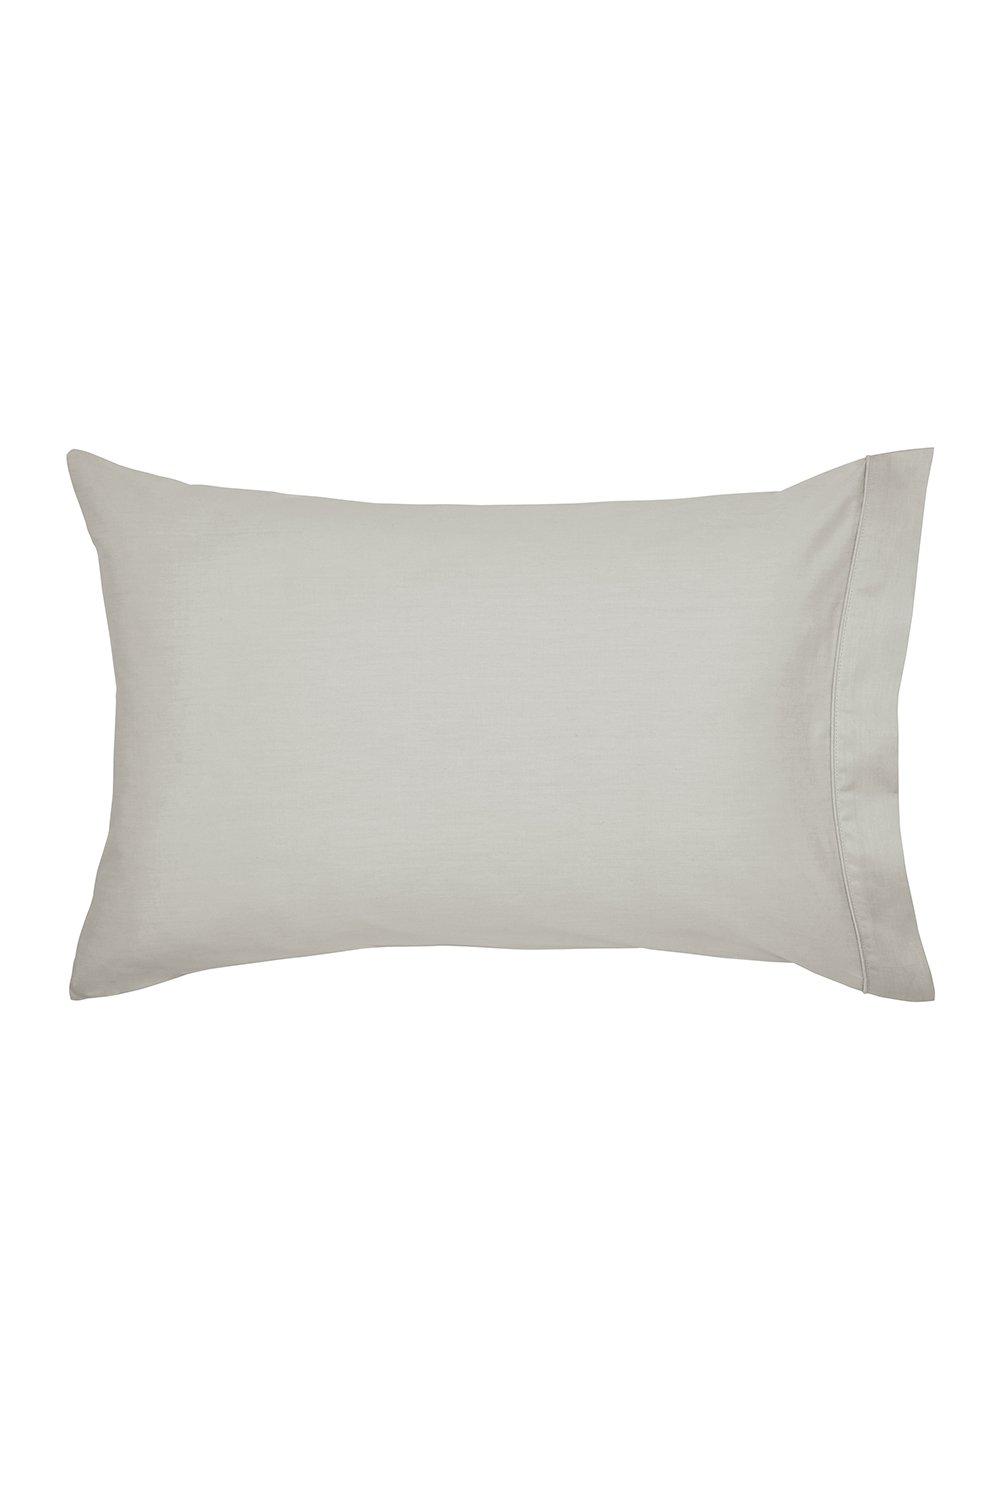 'Long Water Botanical' Standard Pillowcase